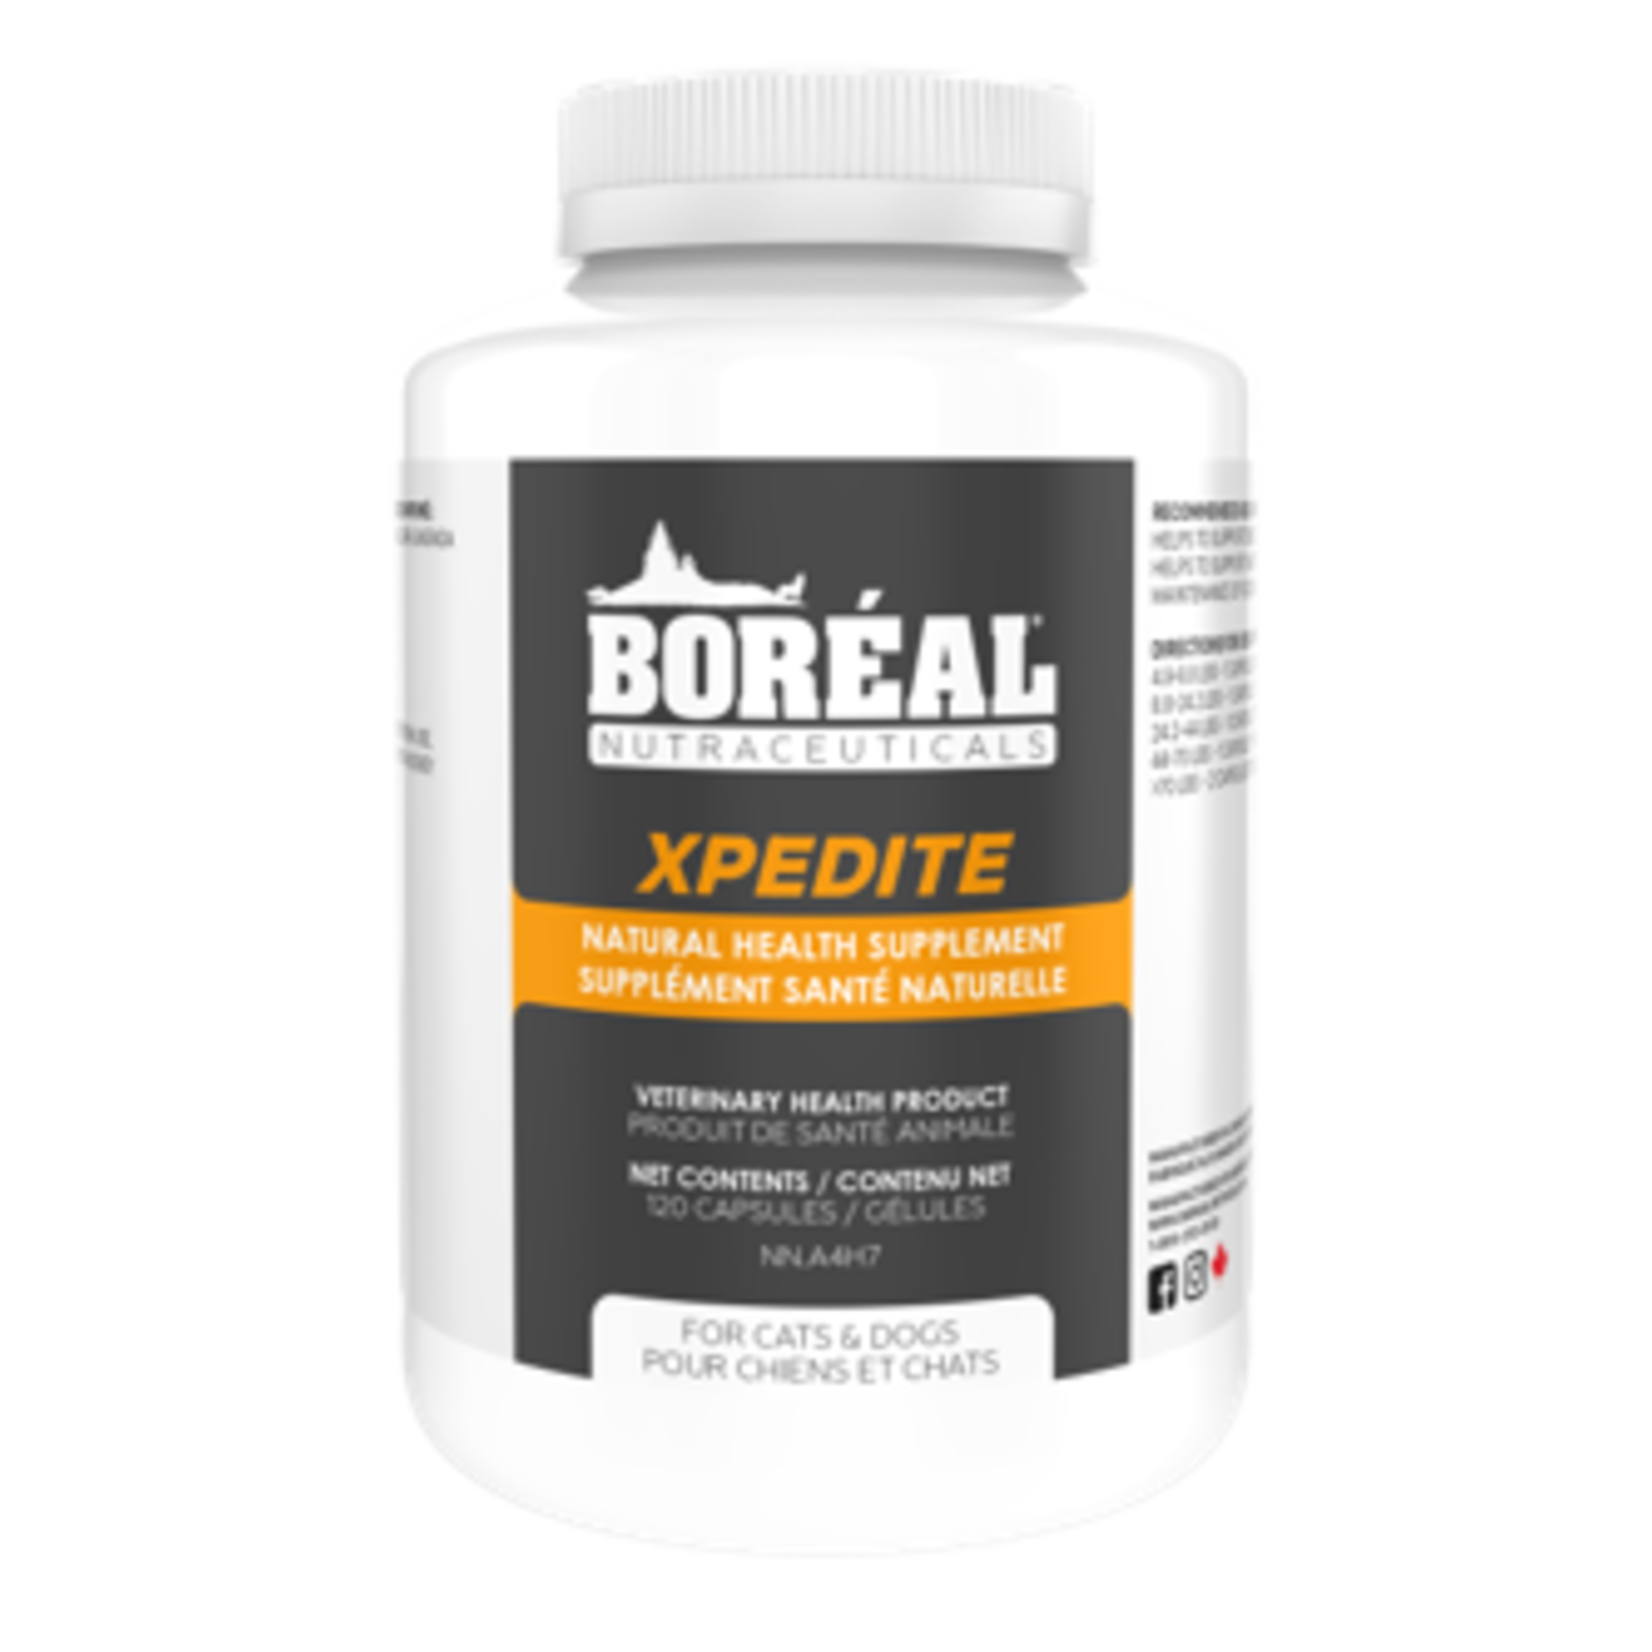 Boreal Xpedite Natural Health Supplement